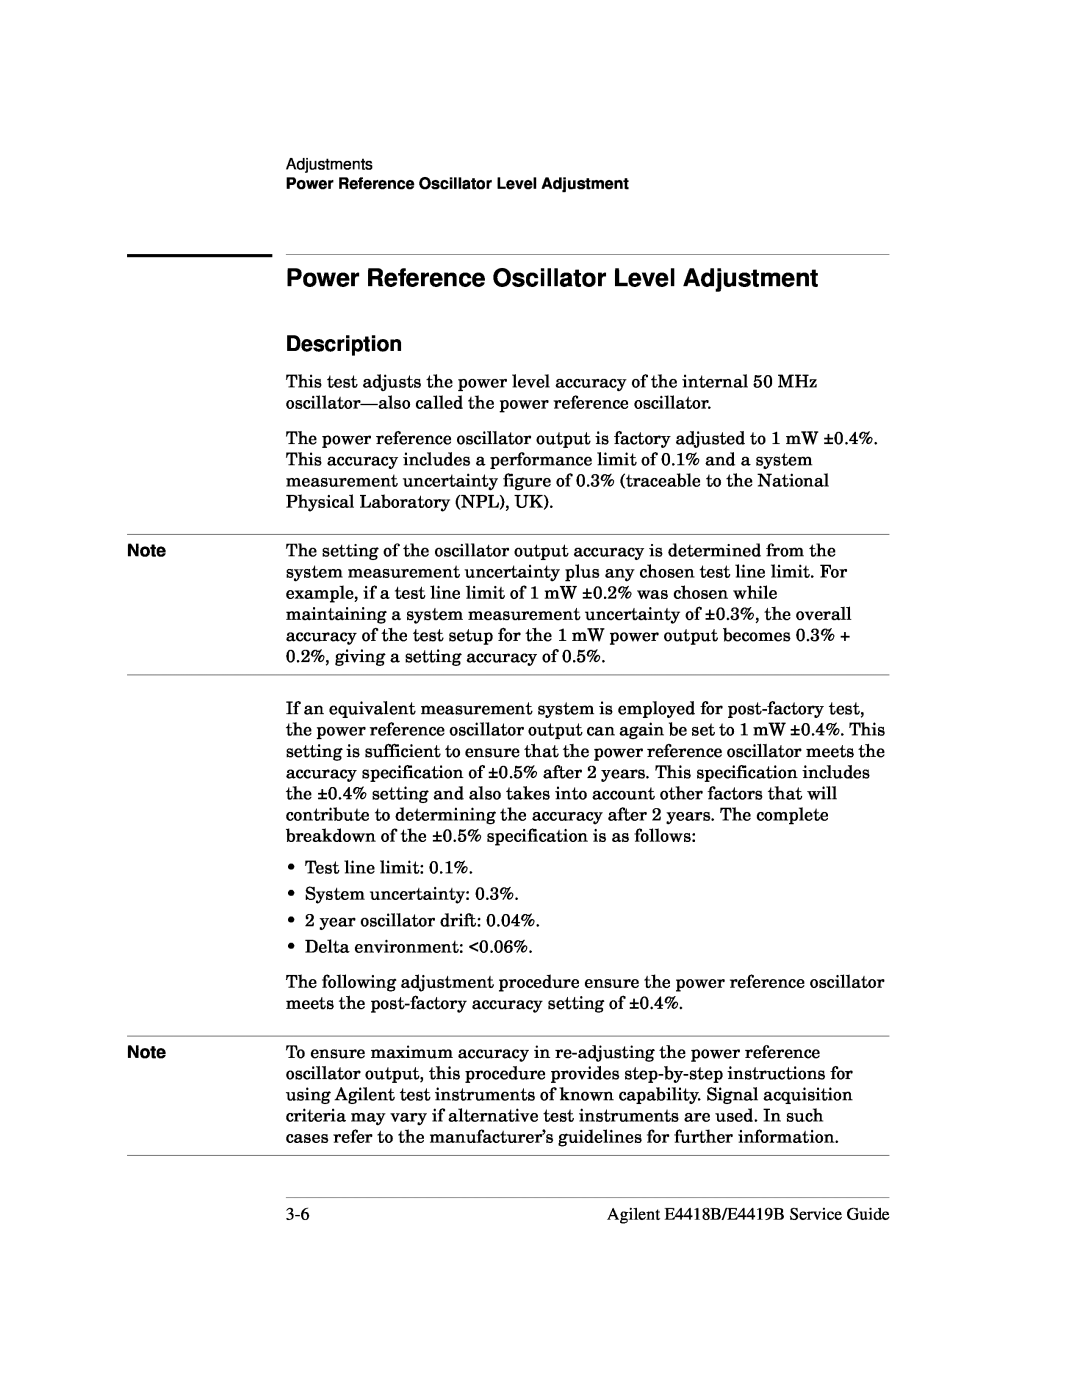 Agilent Technologies e4418b, e4419b manual Power Reference Oscillator Level Adjustment, Description 